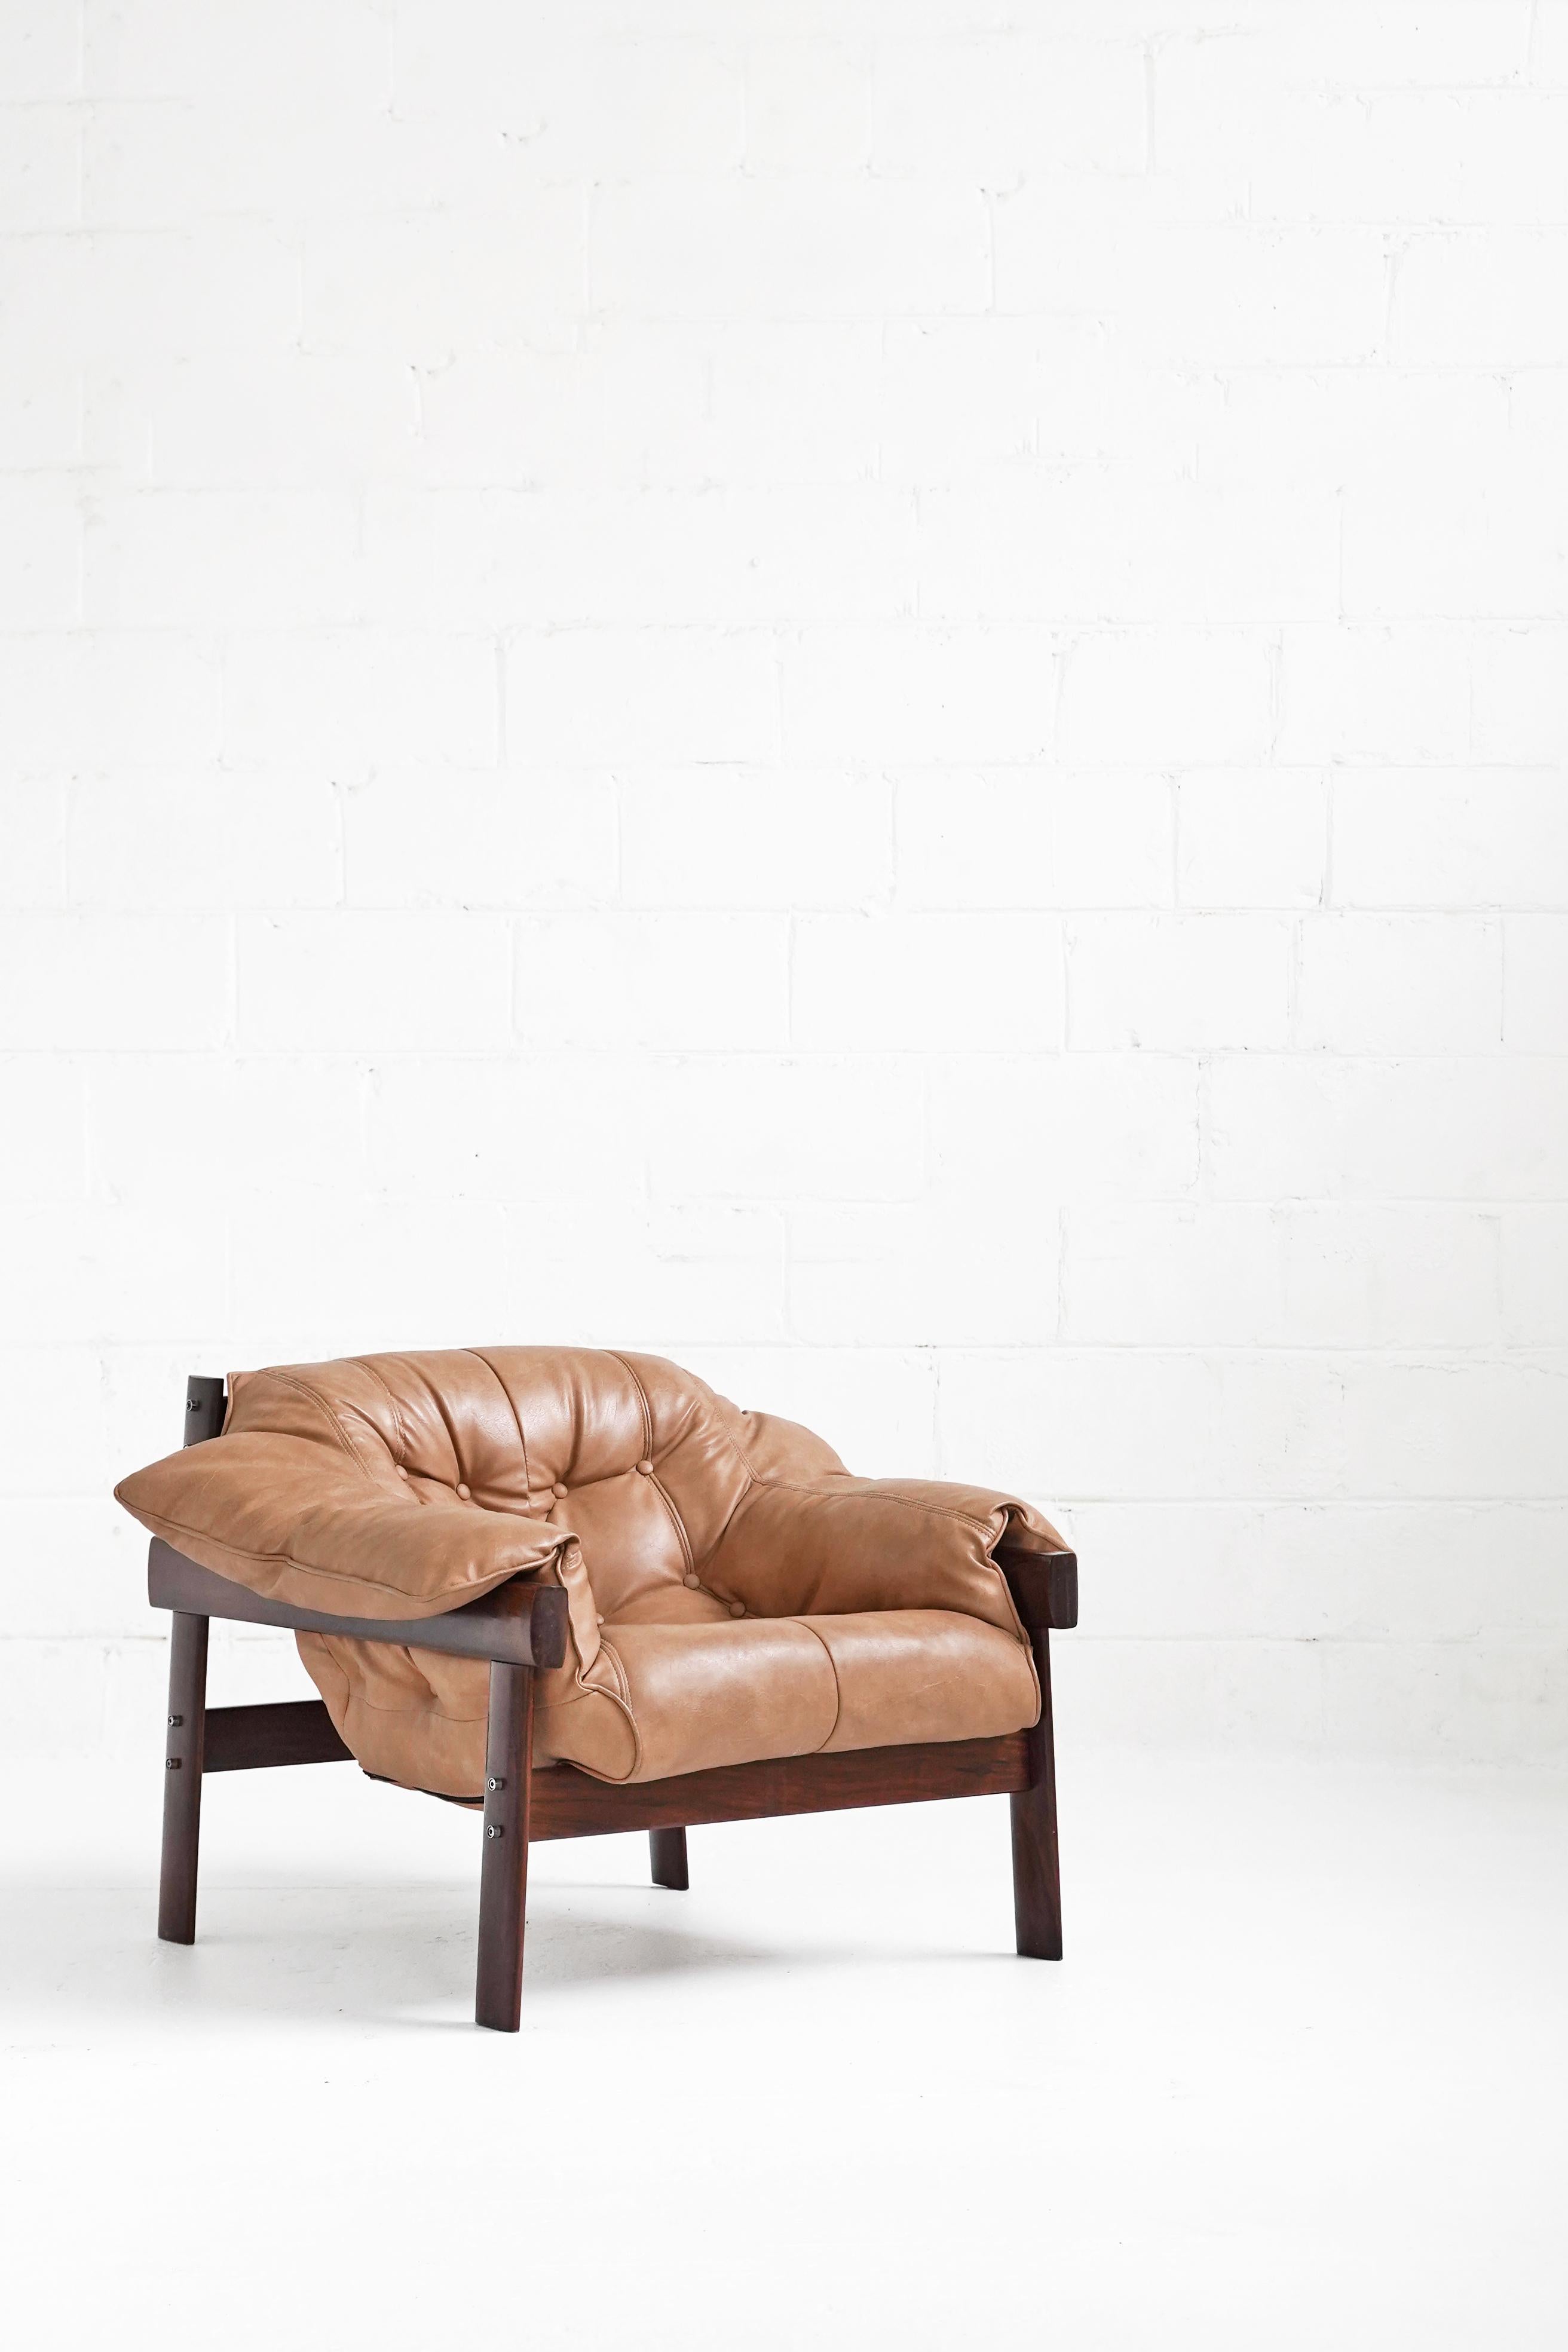 MP-41 Lounge Chair by Brazilian Designer Percival Lafer for Móveis Lafer 4